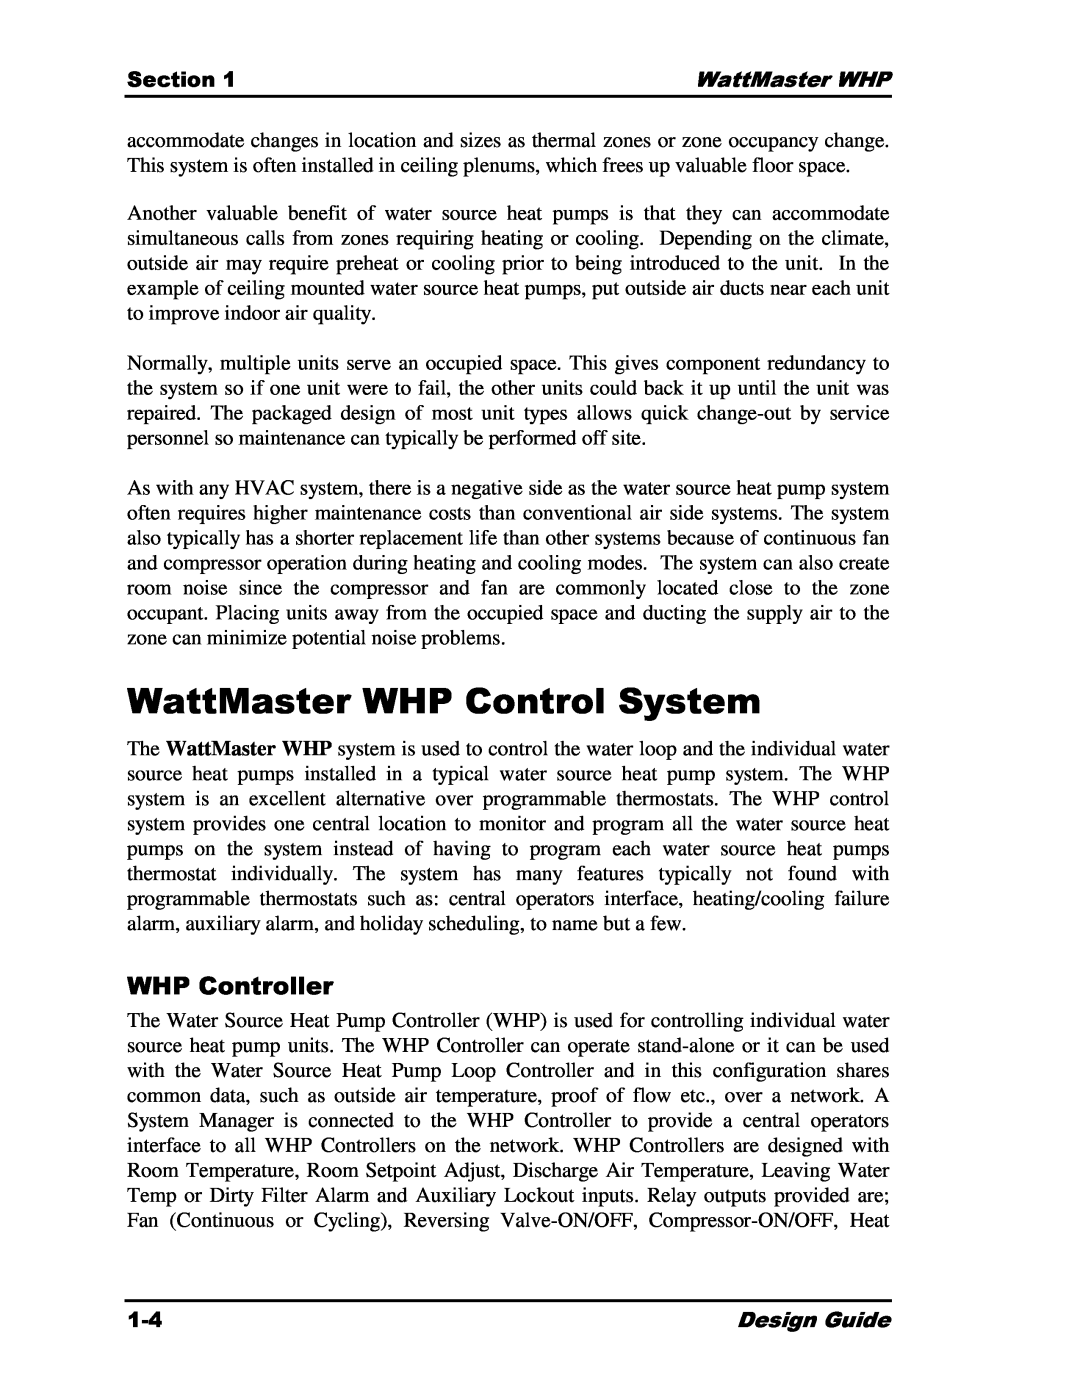 Heat Controller Water Source Heat Pump manual WattMaster WHP Control System, WHP Controller 